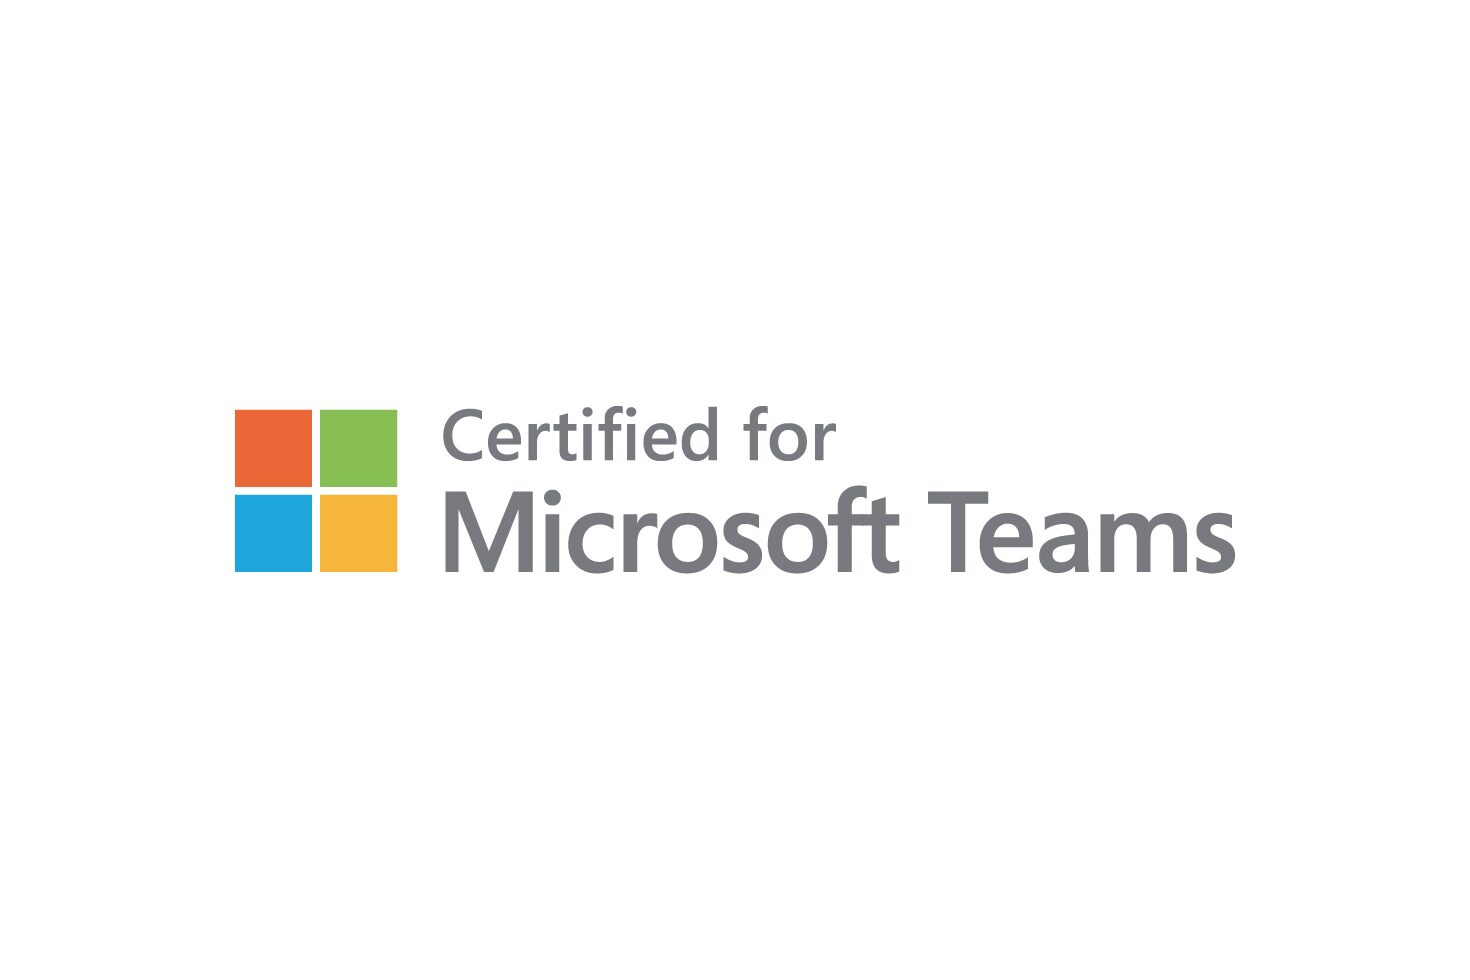 Certified for Microsoft Teams logo